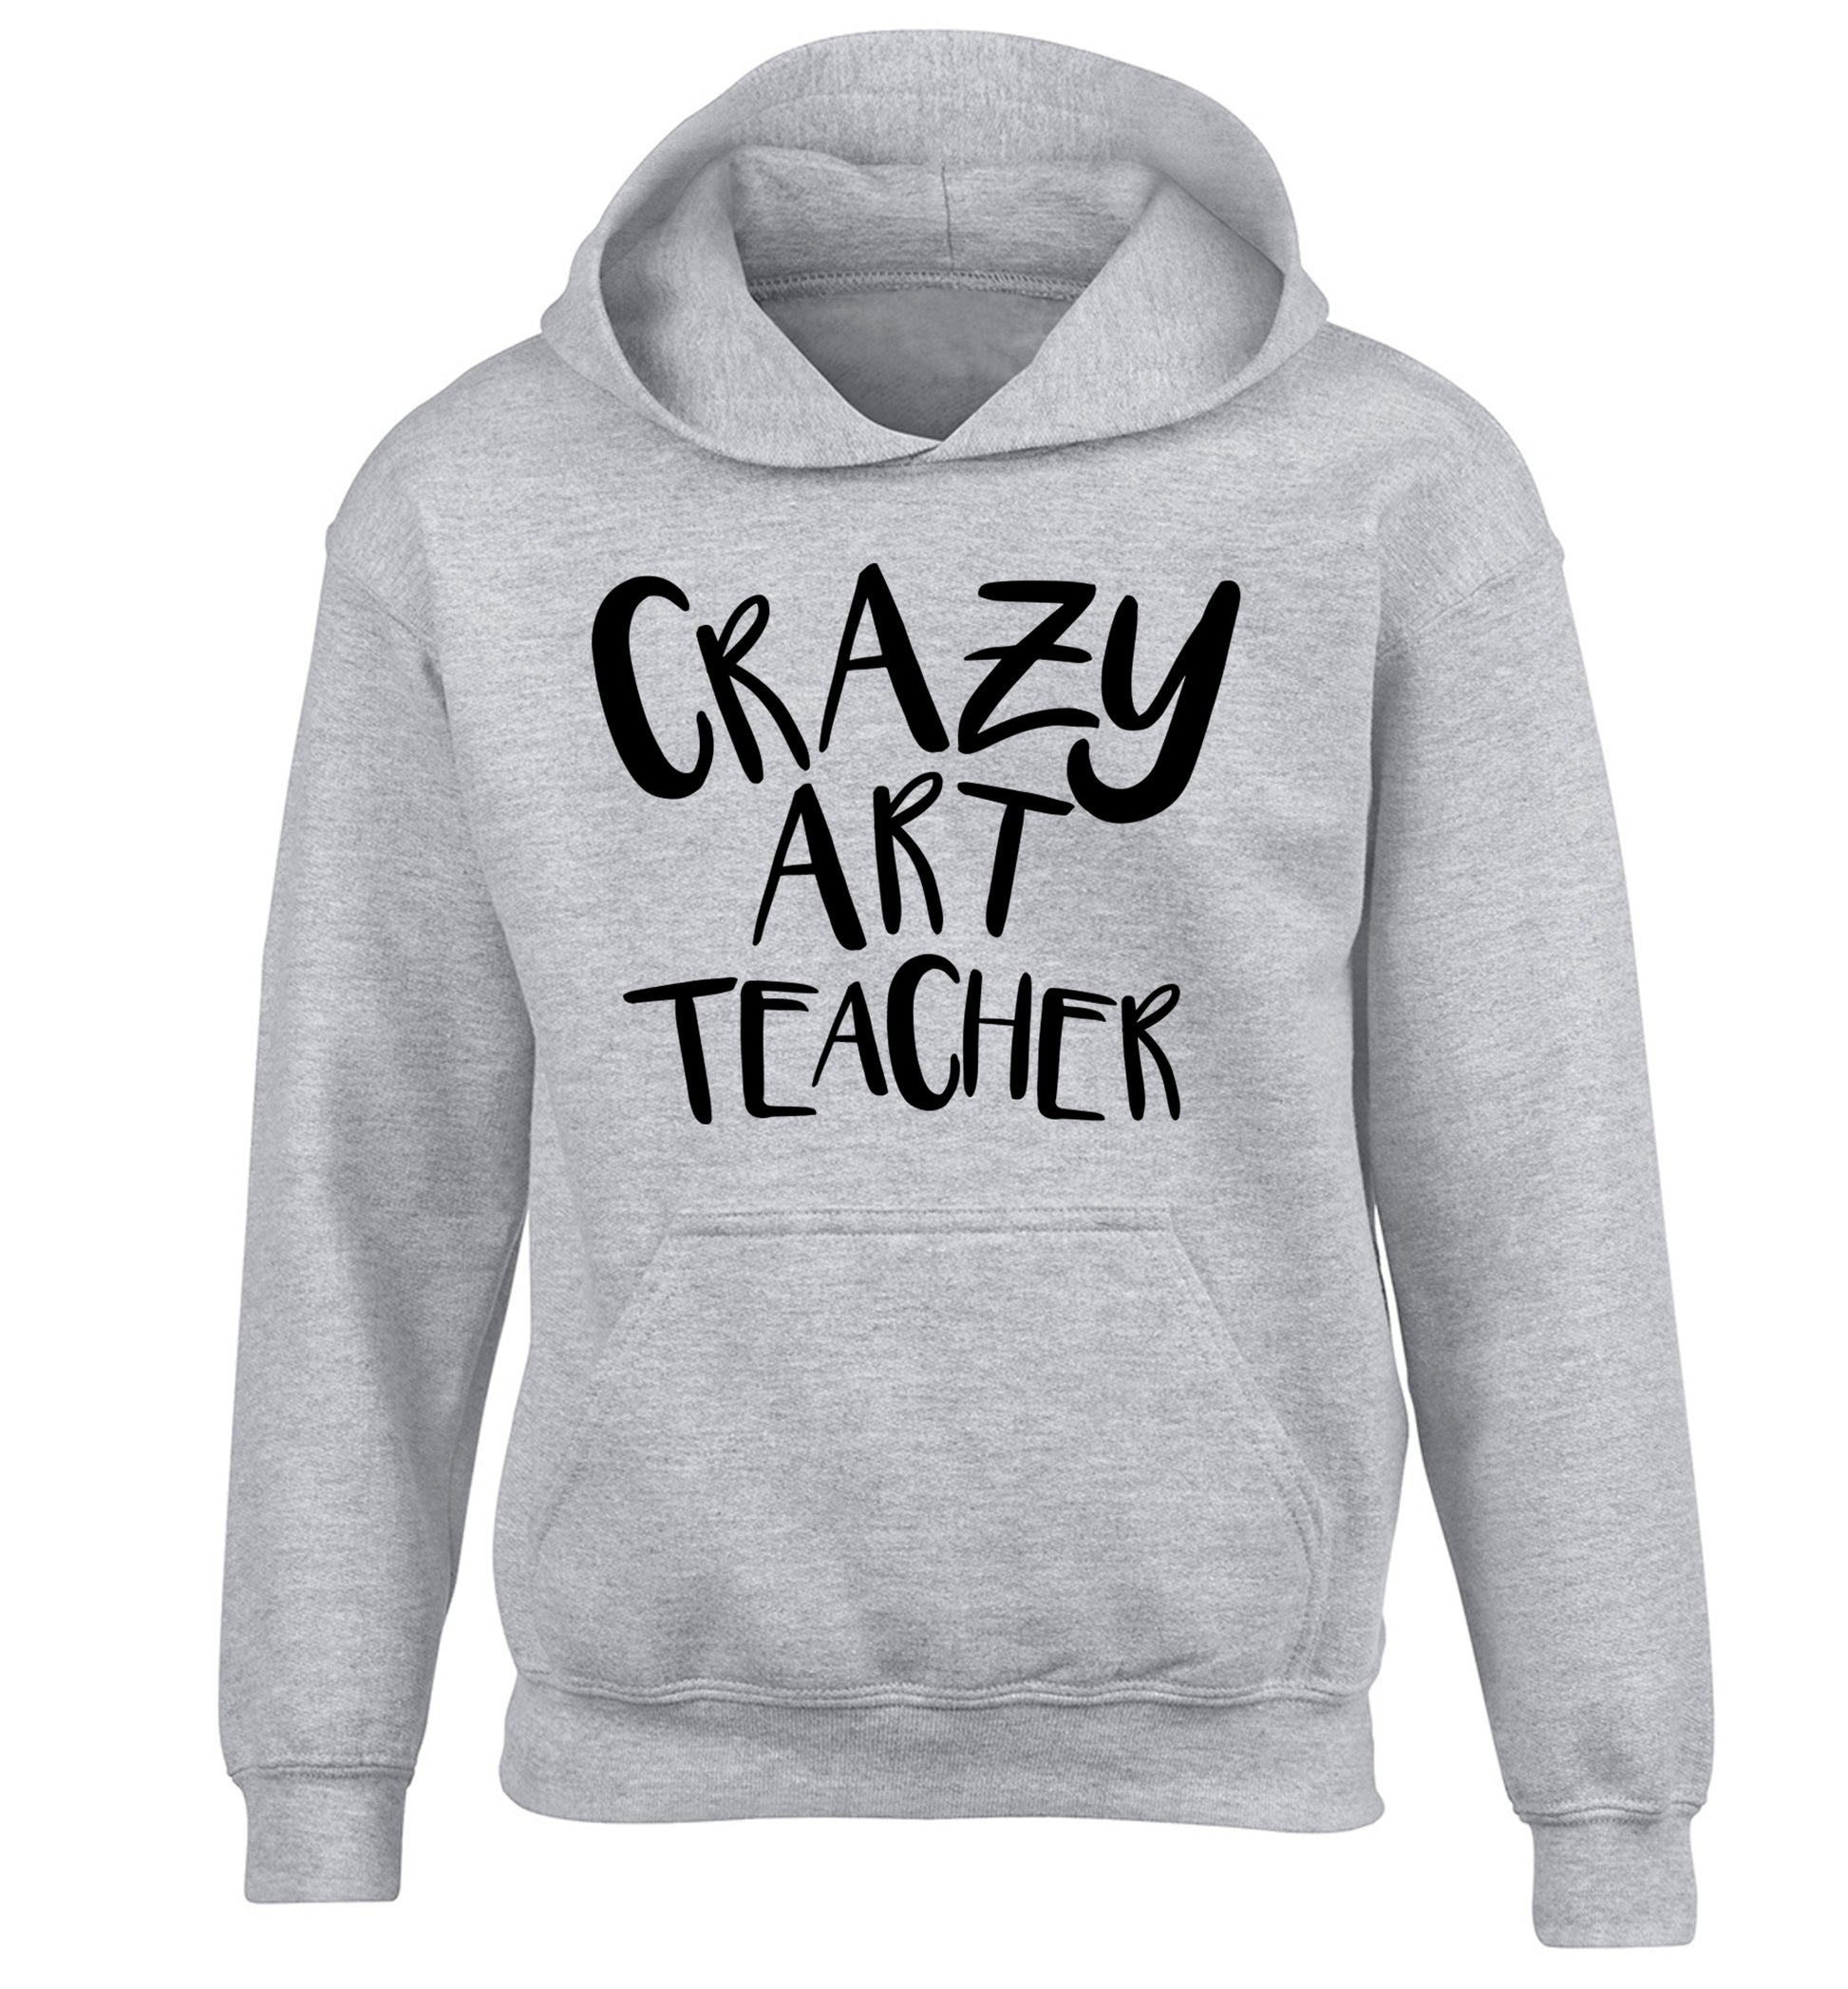 Crazy art teacher children's grey hoodie 12-13 Years